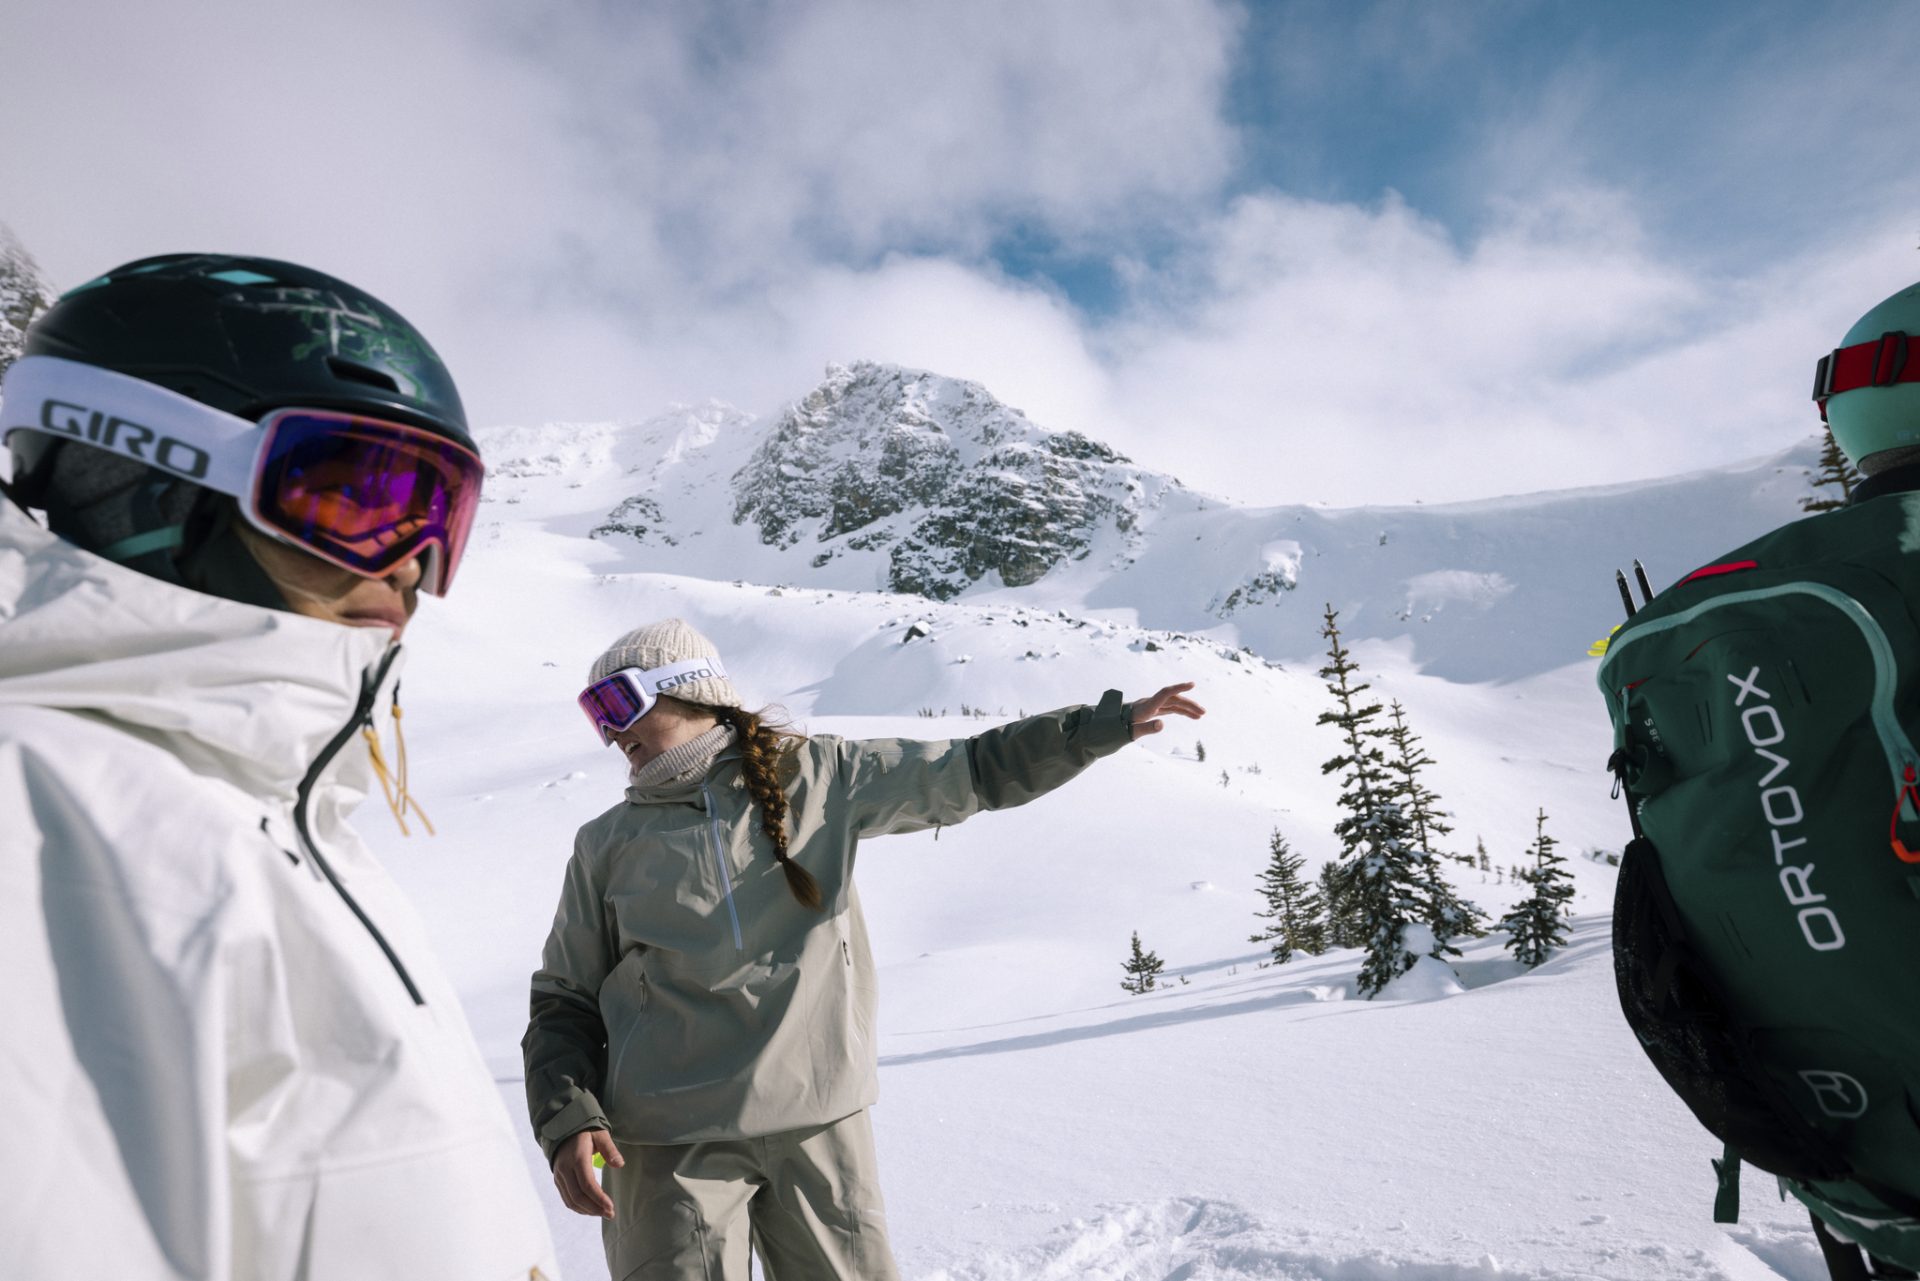 ARCTIX, Planning a ski trip? Check out Arctix for all your ski gear needs  🎿 #skiing #winterfun #adventure #snow #skiinggear #mountains